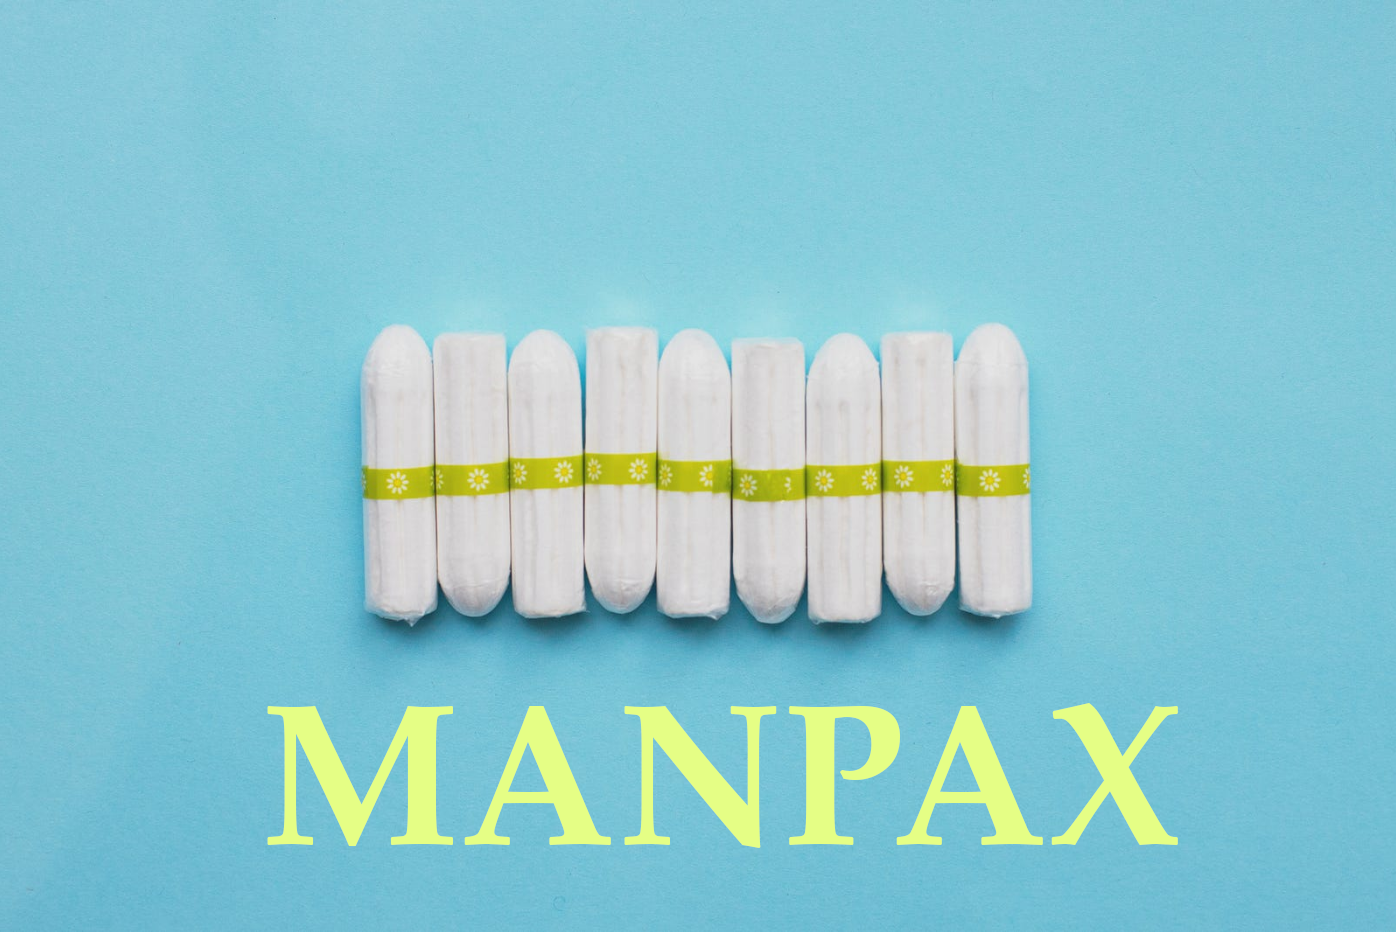 Men Try 'Period Pain Simulator' To Understand Menstruation - Men's